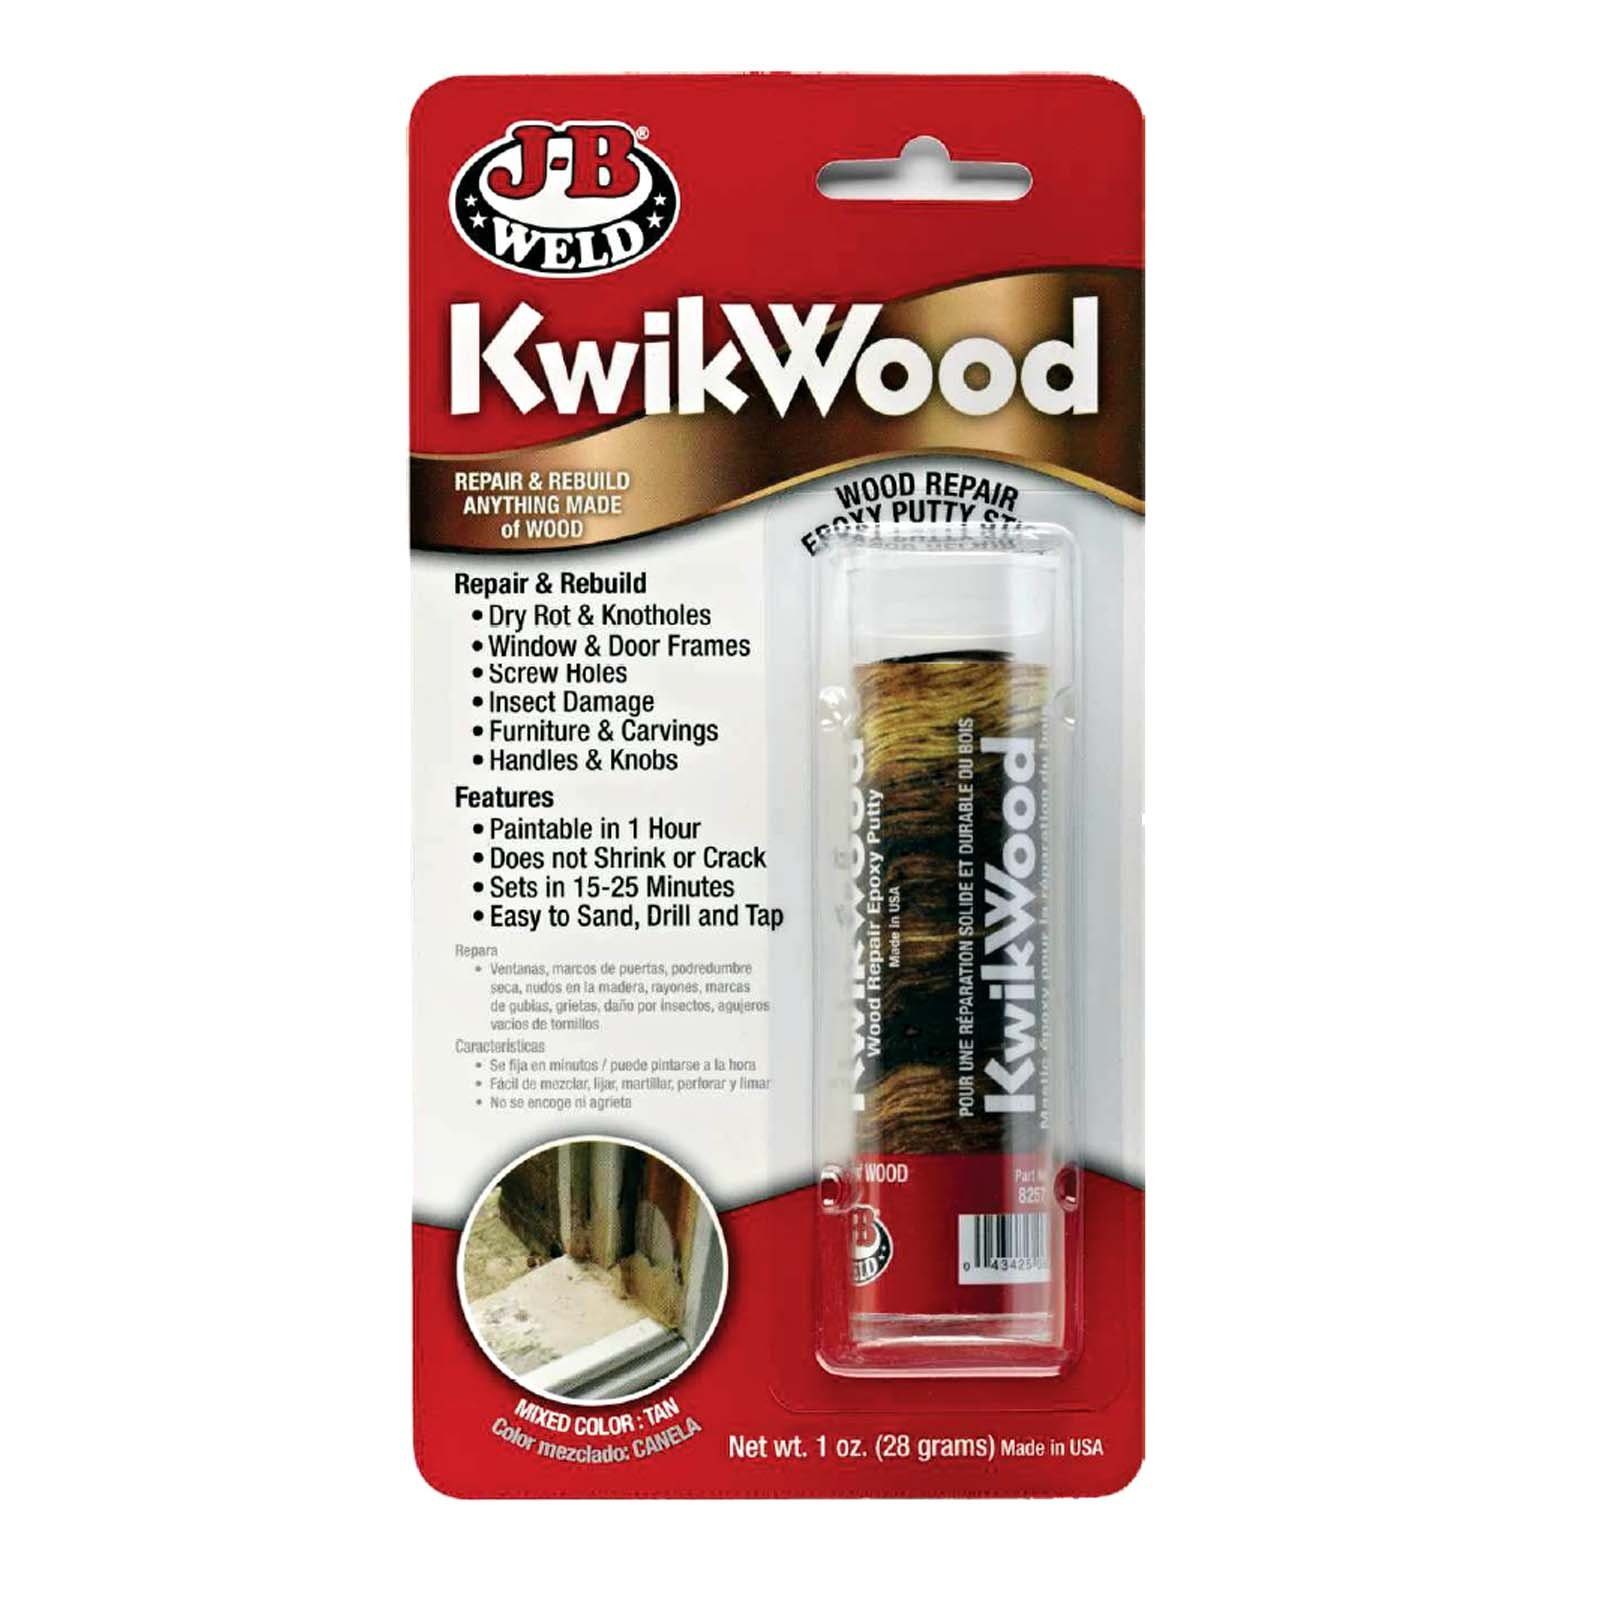 KwikWood WELD Holzfarbe Kleber Reparatur Holz Kleber (1-St) Klebeband J-B in